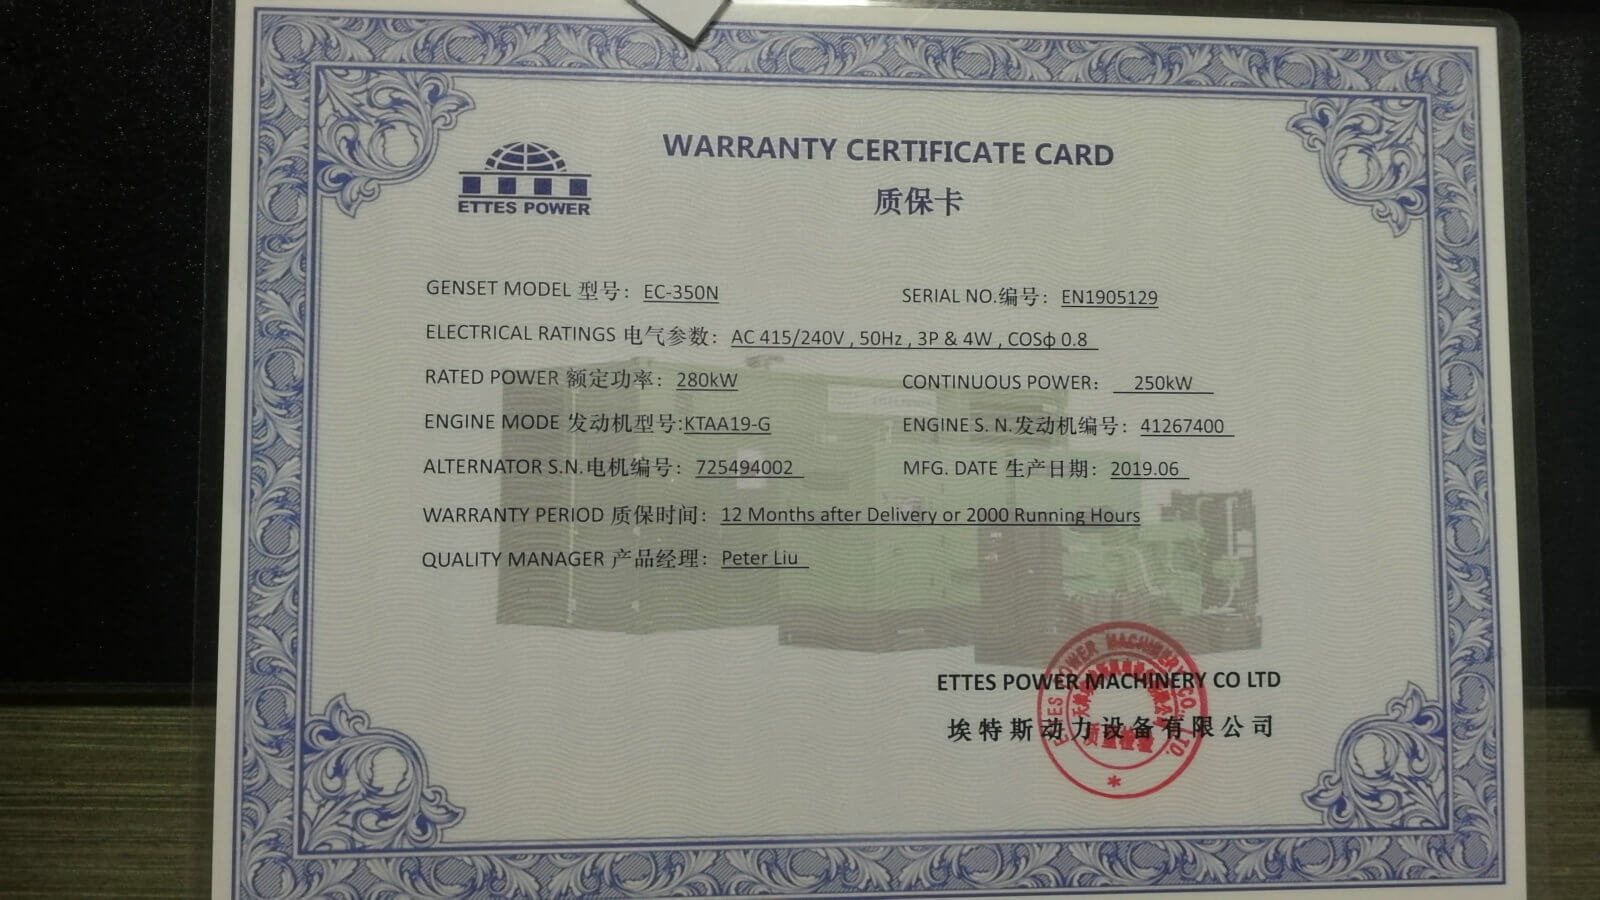 Warranty Certificate Card for 300kW Cummins Natural Gas Engine Generator Set ETTES POWER